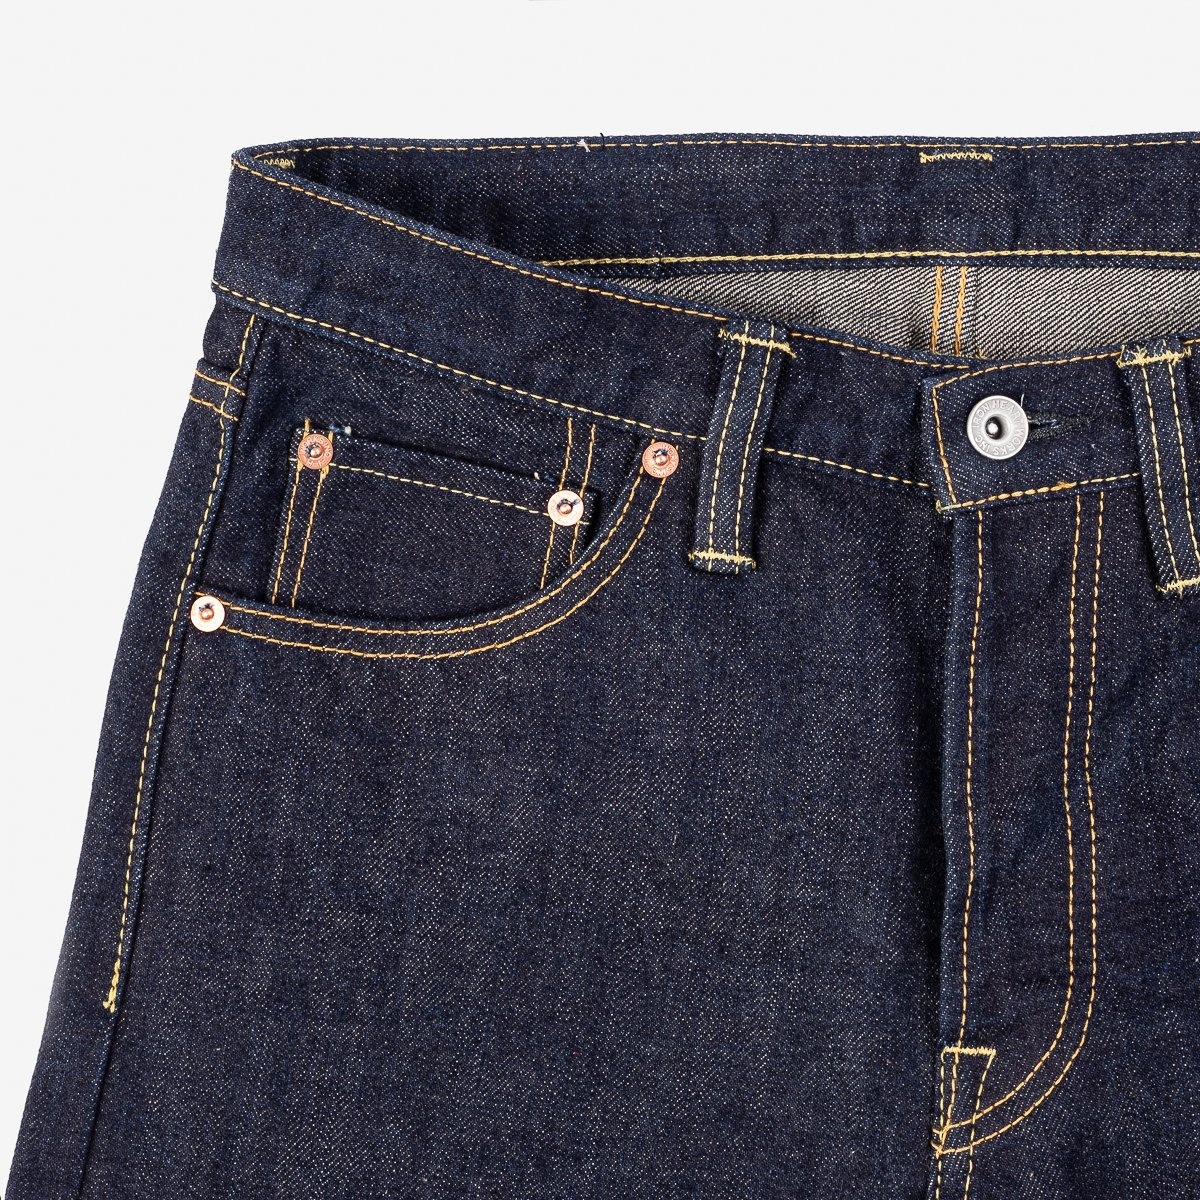 IH-555N 17oz Selvedge Denim Super Slim Cut Jeans - Natural Indigo - 6